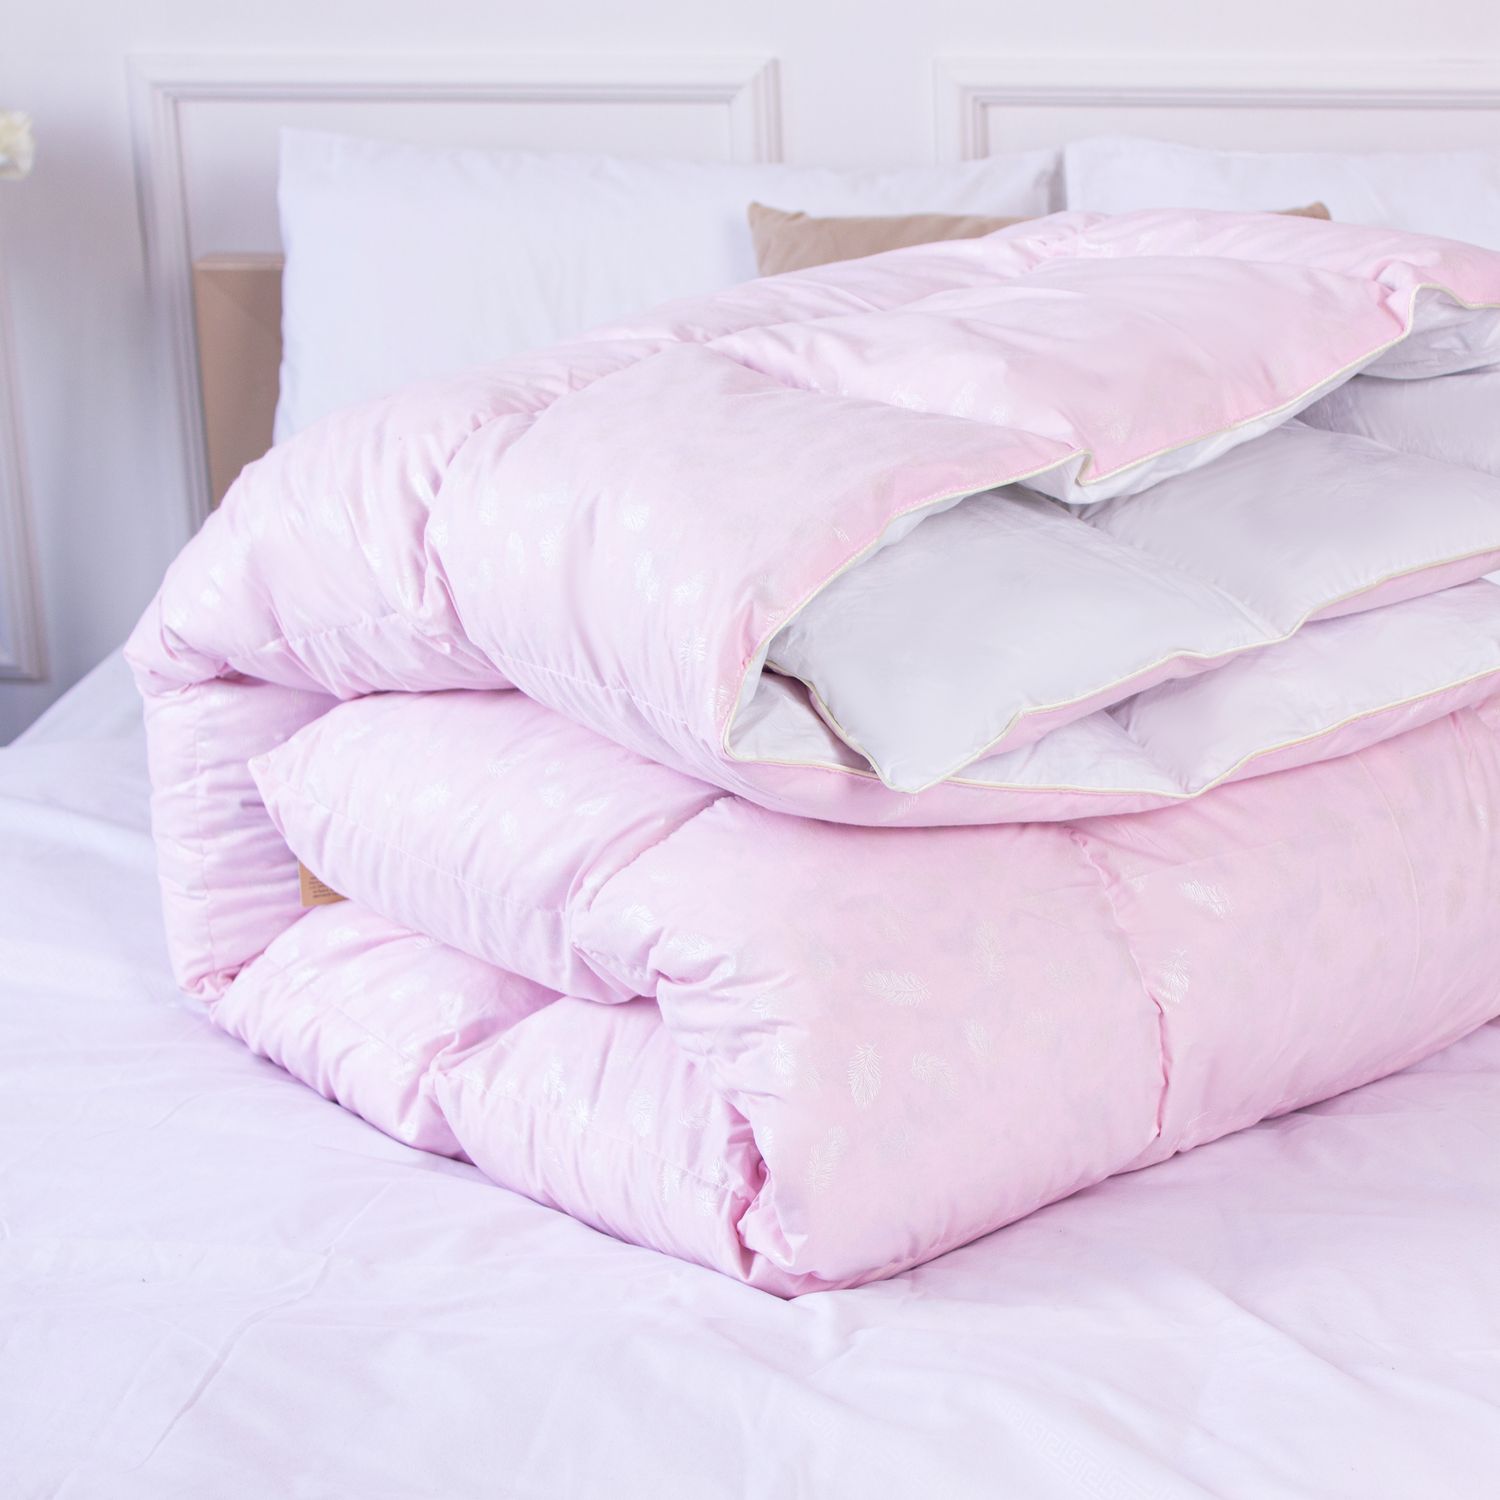 Одеяло пуховое MirSon Karmen №1859 Bio-Pink, 70% пух, евростандарт, 220x200, розовое (2200003014624) - фото 3